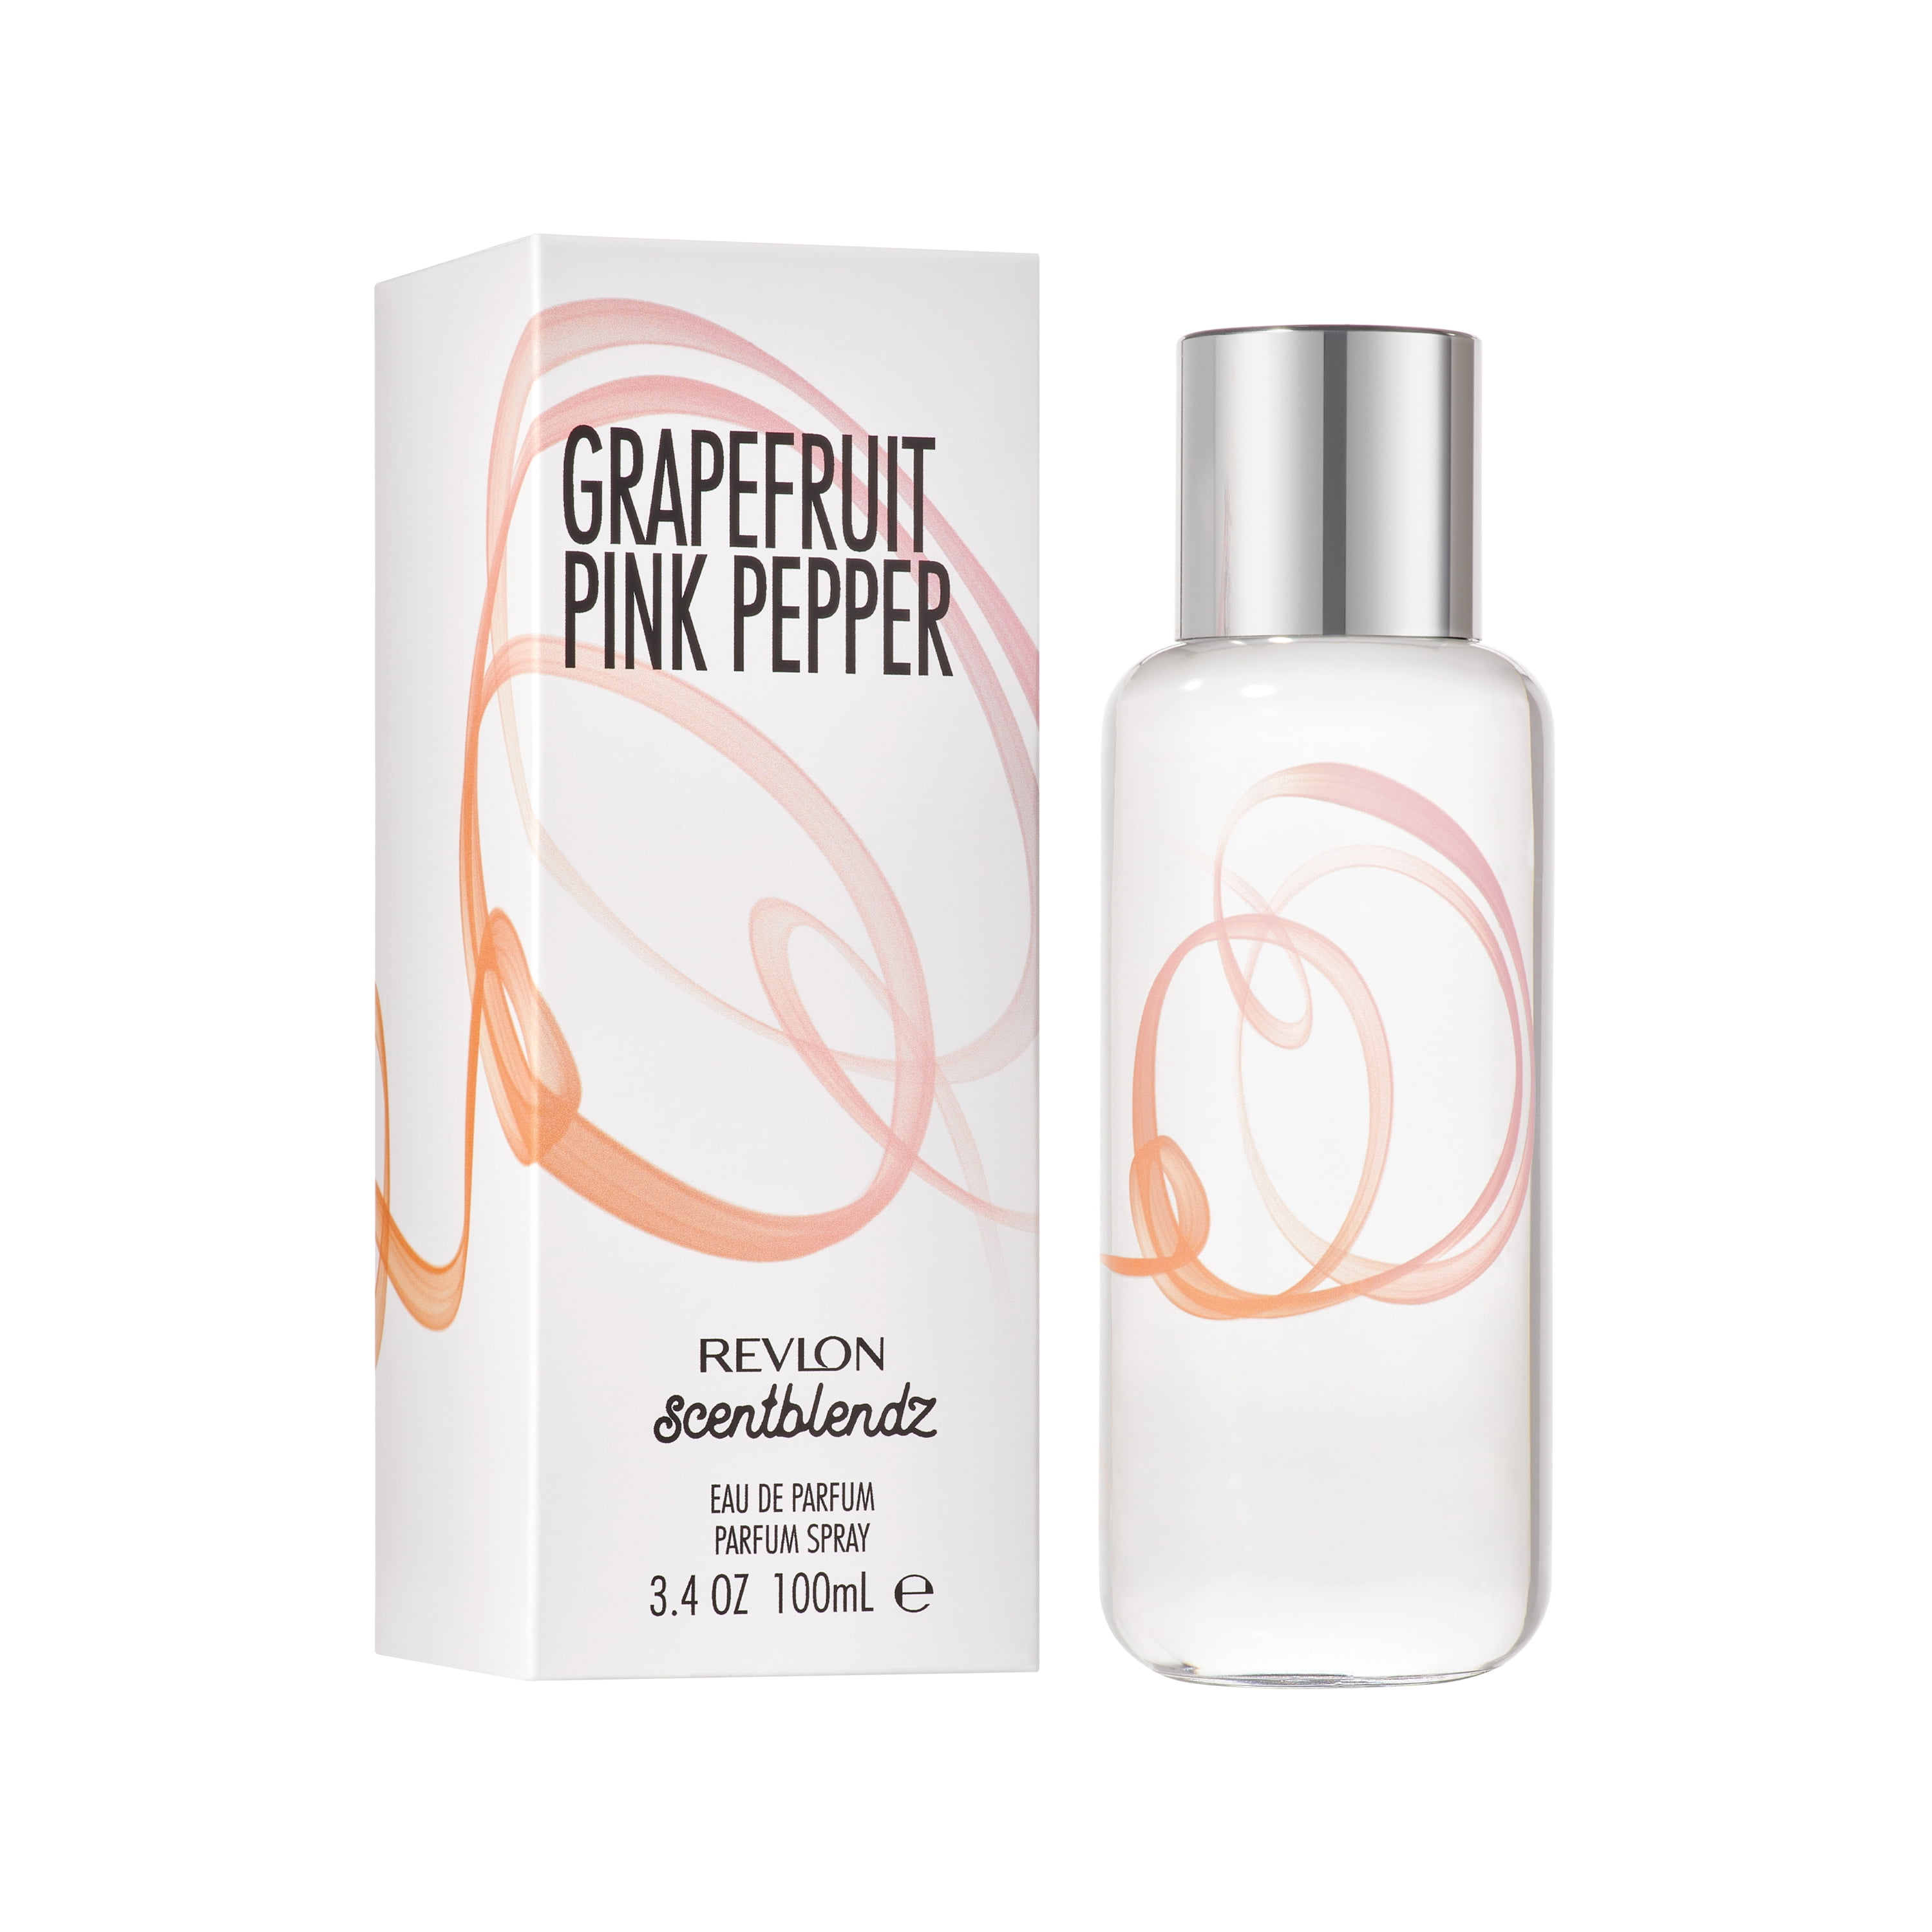 Revlon Scentblendz, Grapefruit Pink Pepper Eau de Parfum, Artisanal Fragrance Spray, Perfume for Women, 3.4 fl. Oz